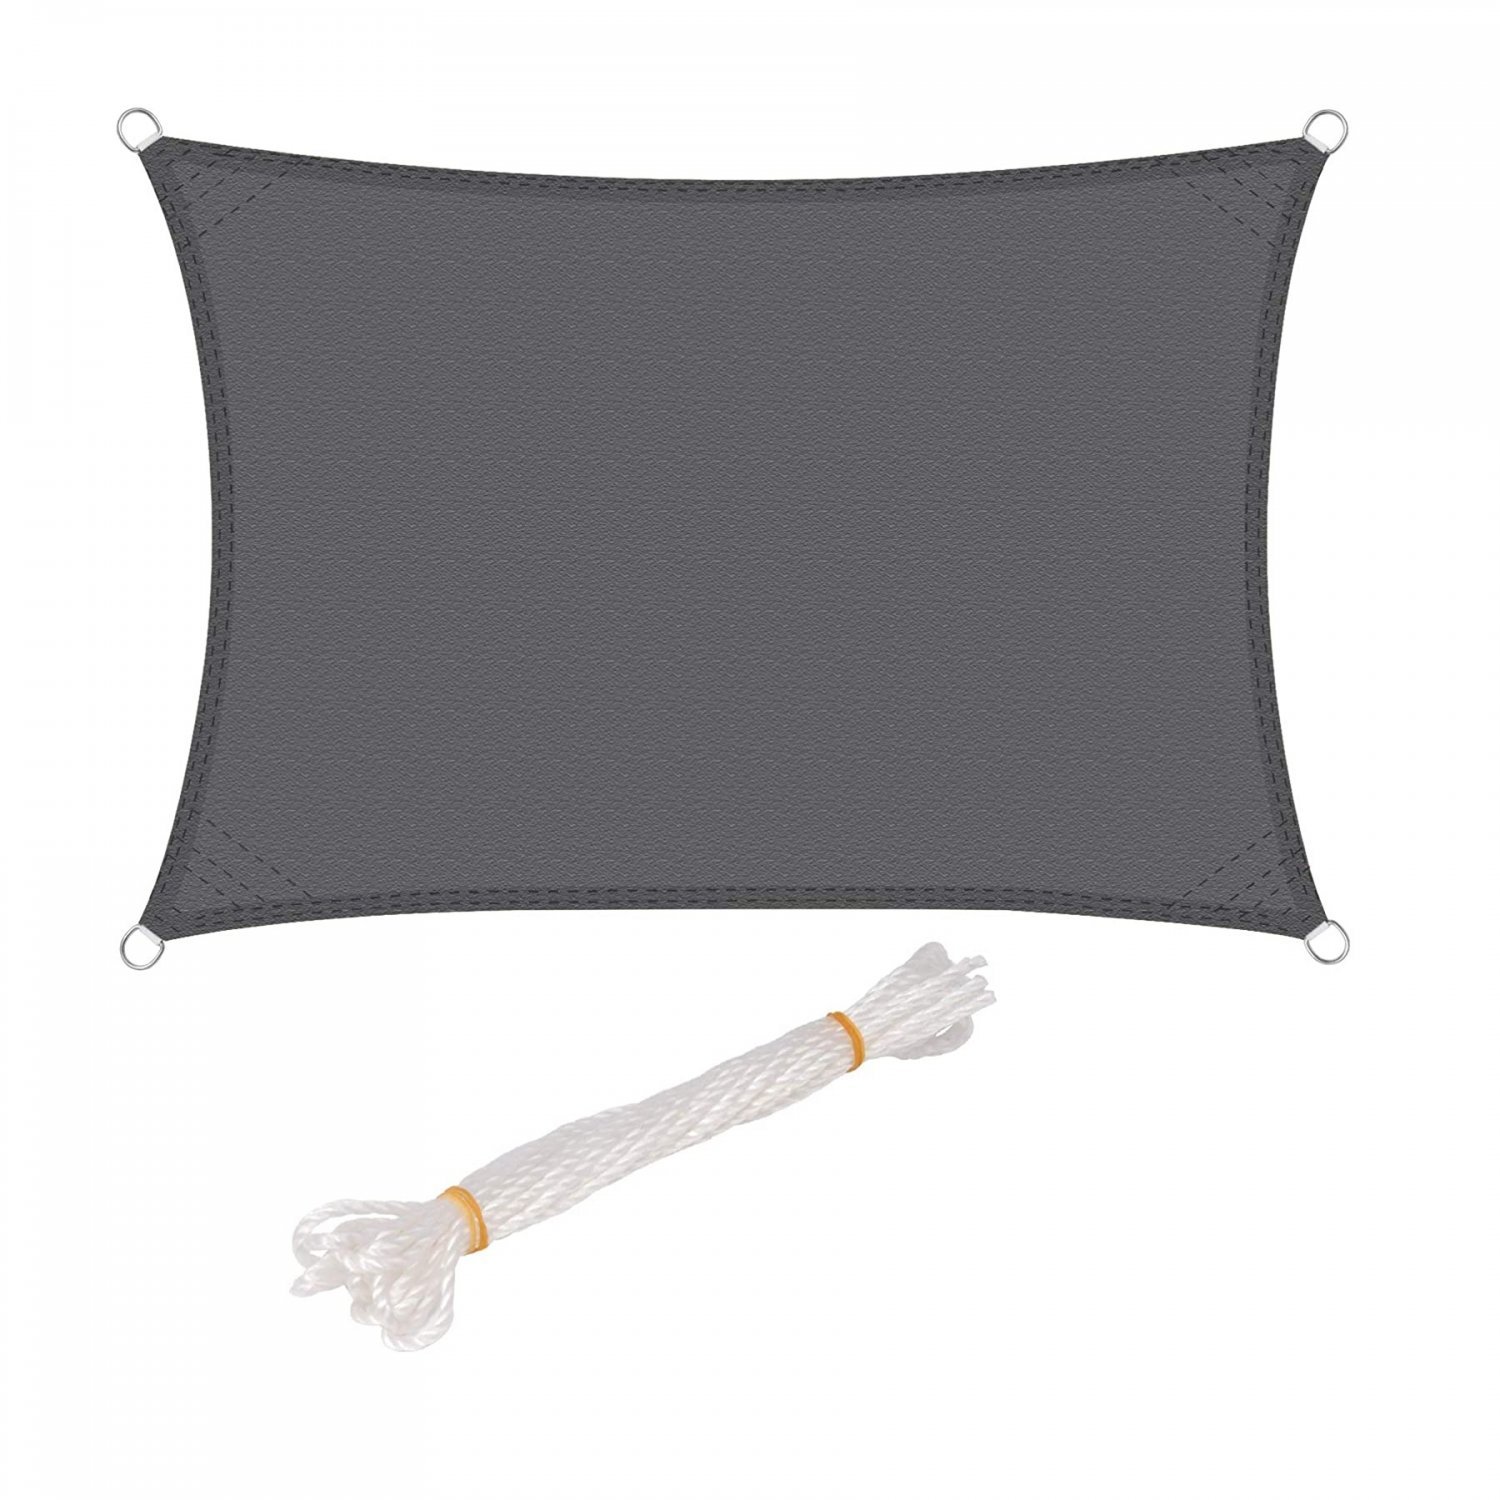 3m x 4m Grey Rectangular Outdoor Patio Sun Shade Sail Canopy UV Protection - Click Image to Close